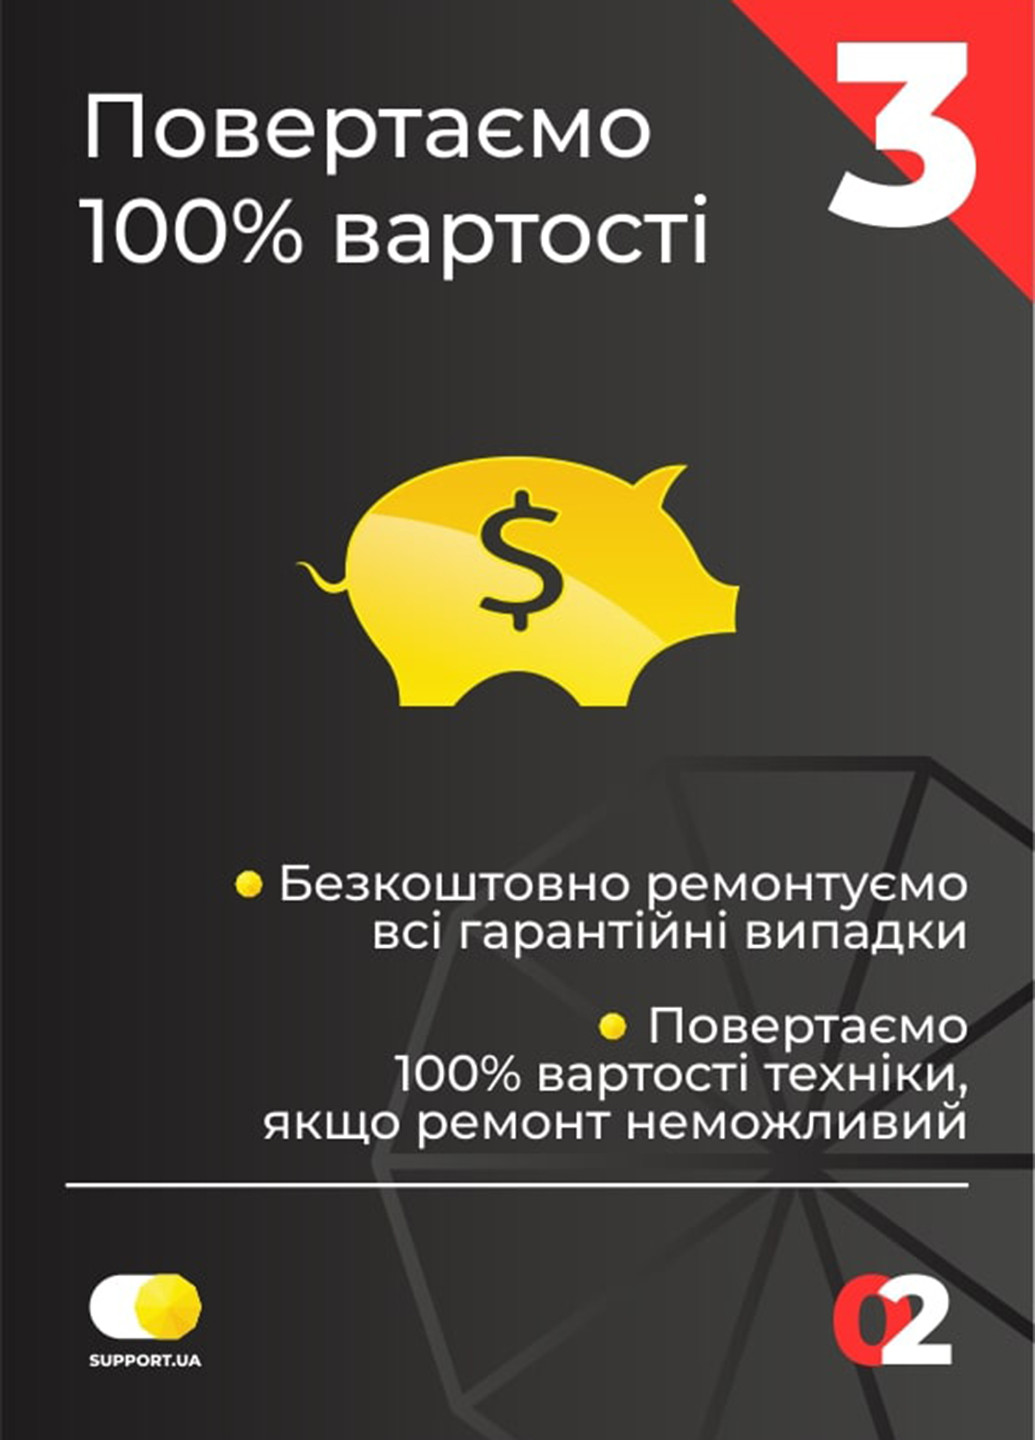 +1 год гарантии (2001-3000), Электронный сертификат от Support.ua